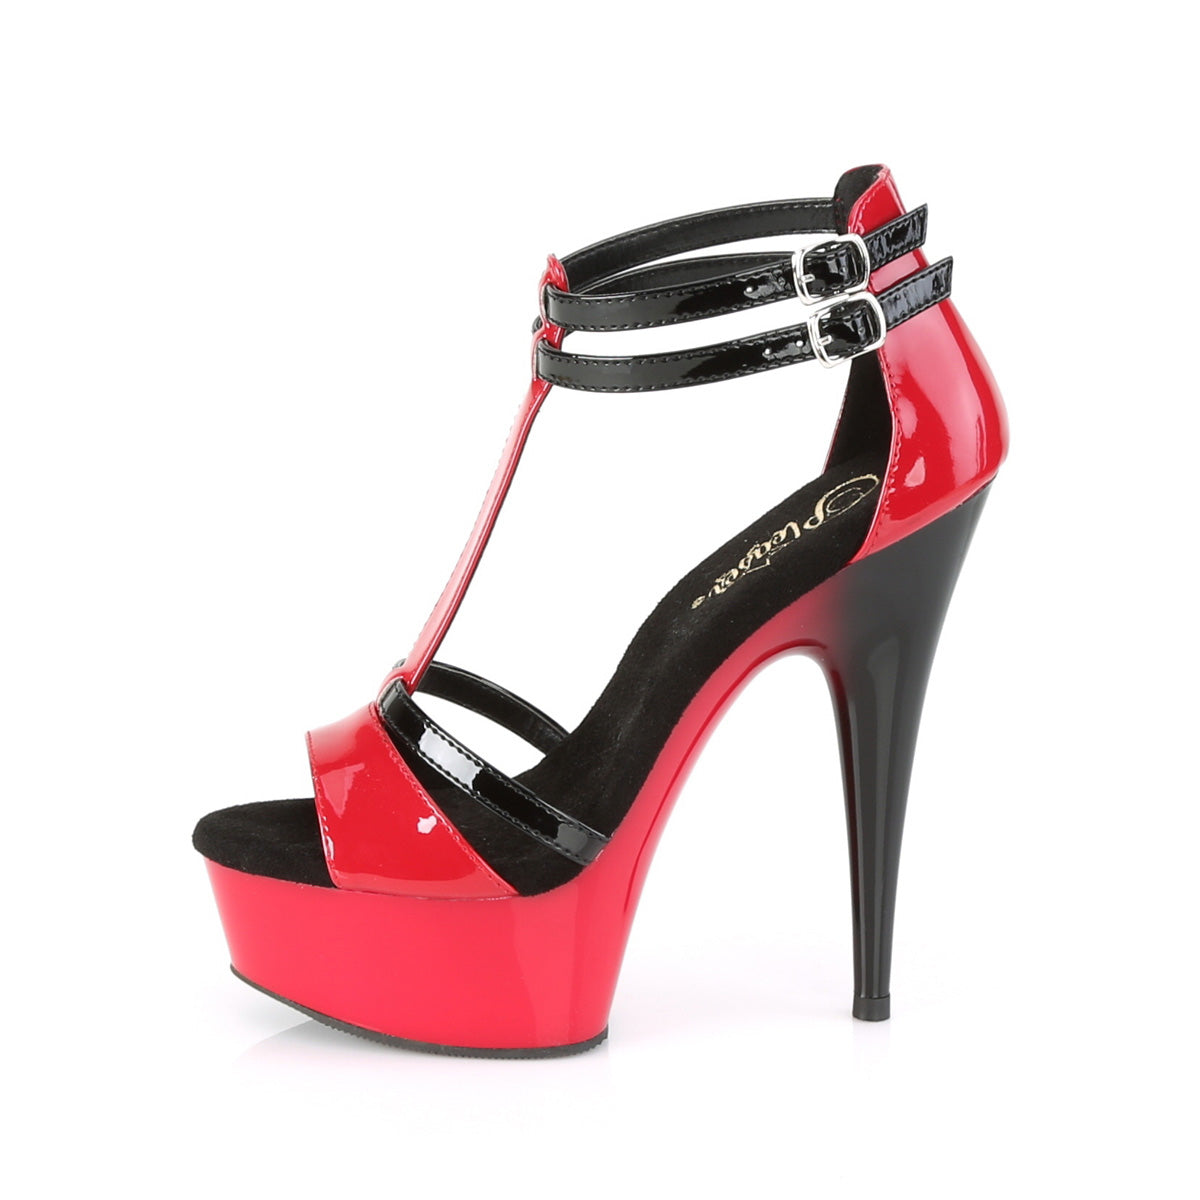 6 Inch Heel DELIGHT-663 Red Black – Shoecup.com